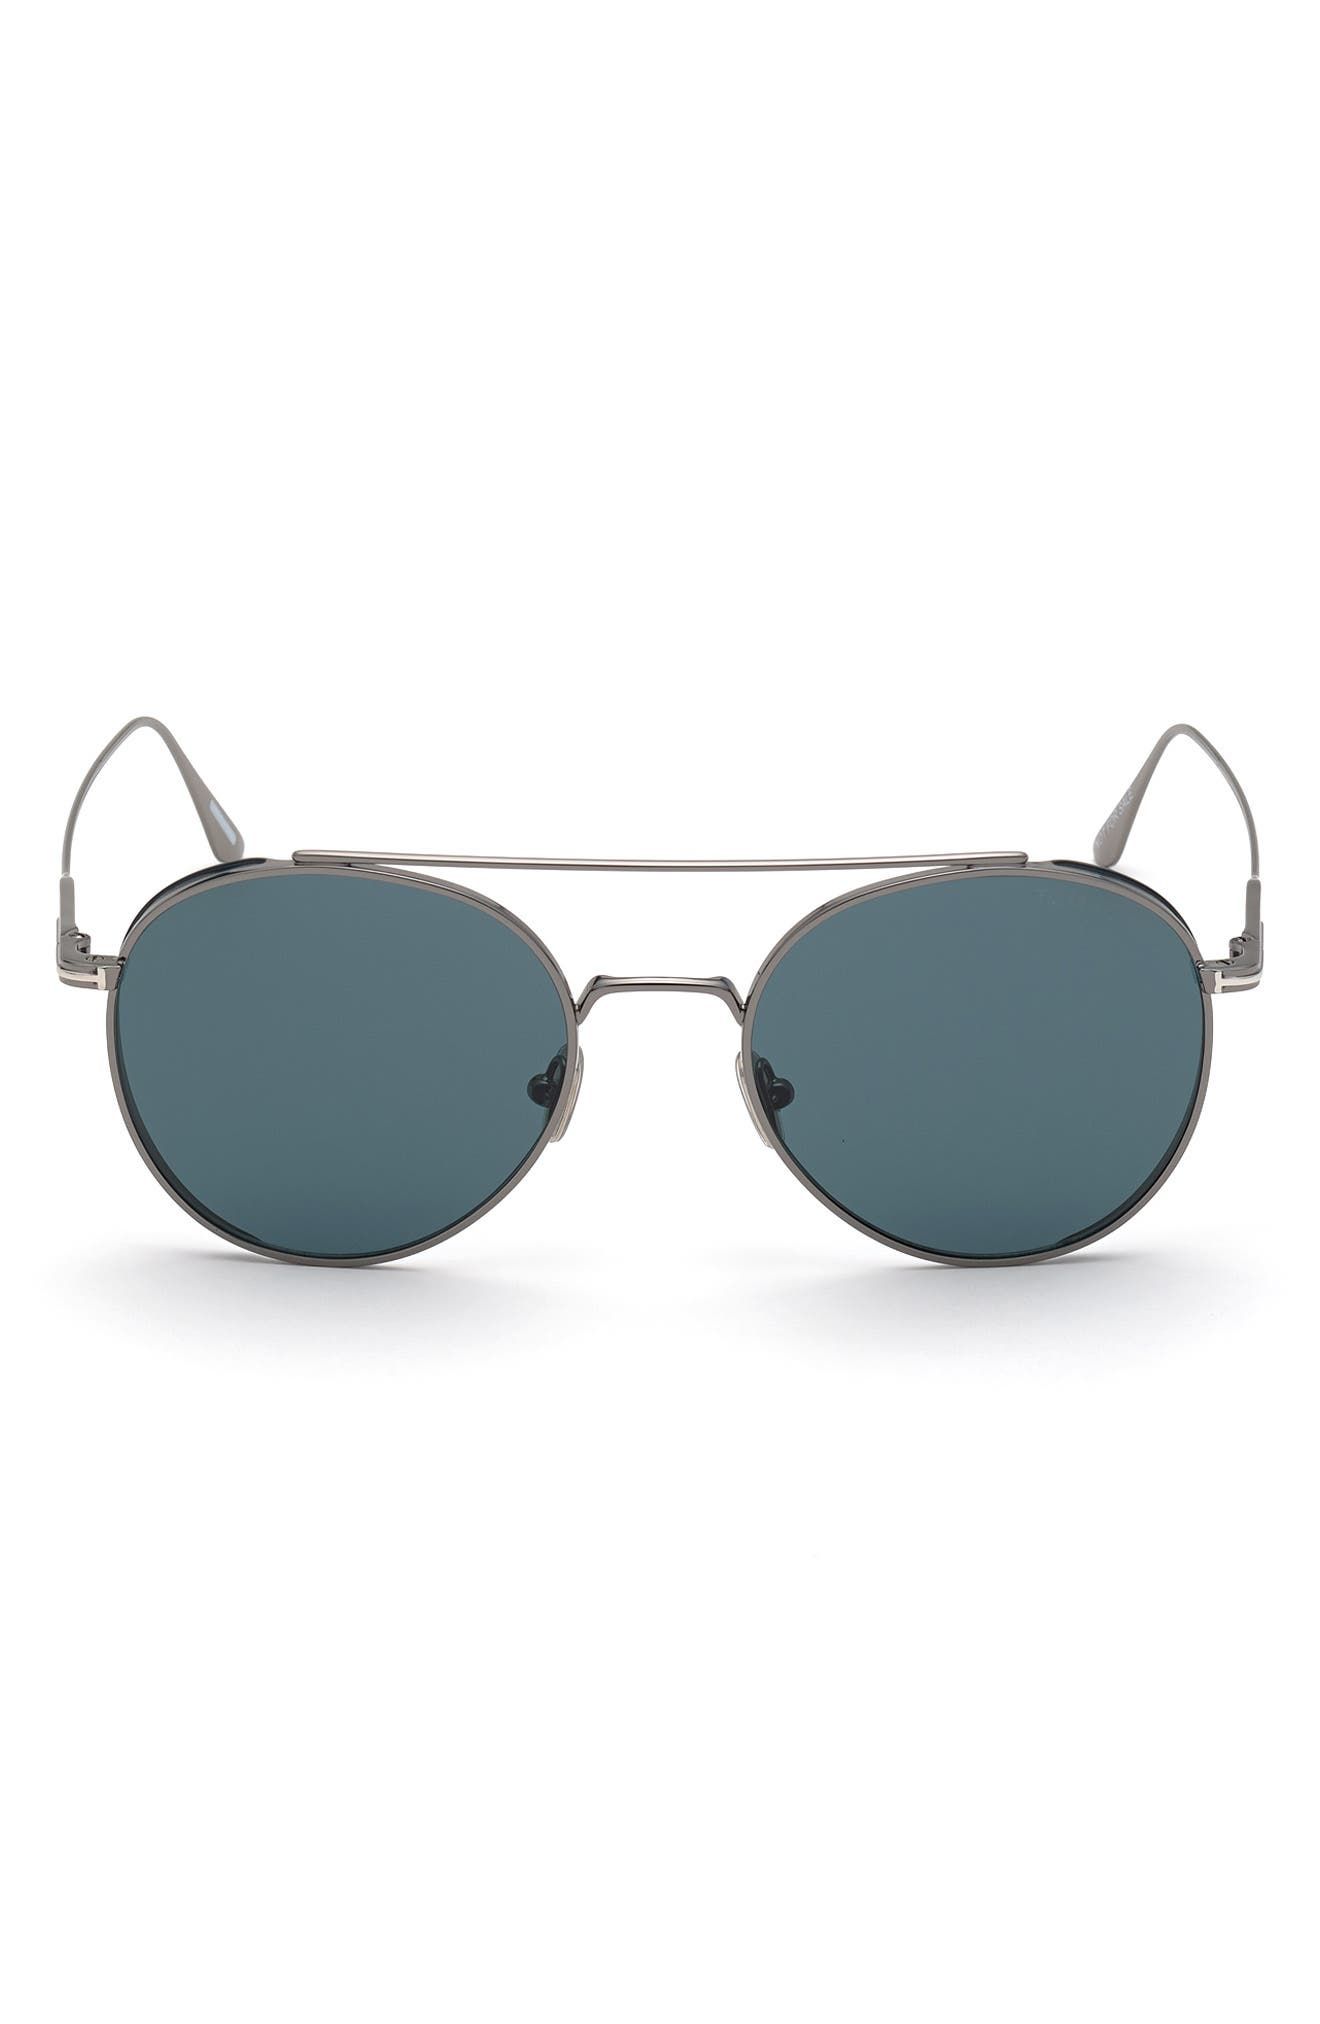 Tom Ford Declan 54mm Round Sunglasses 